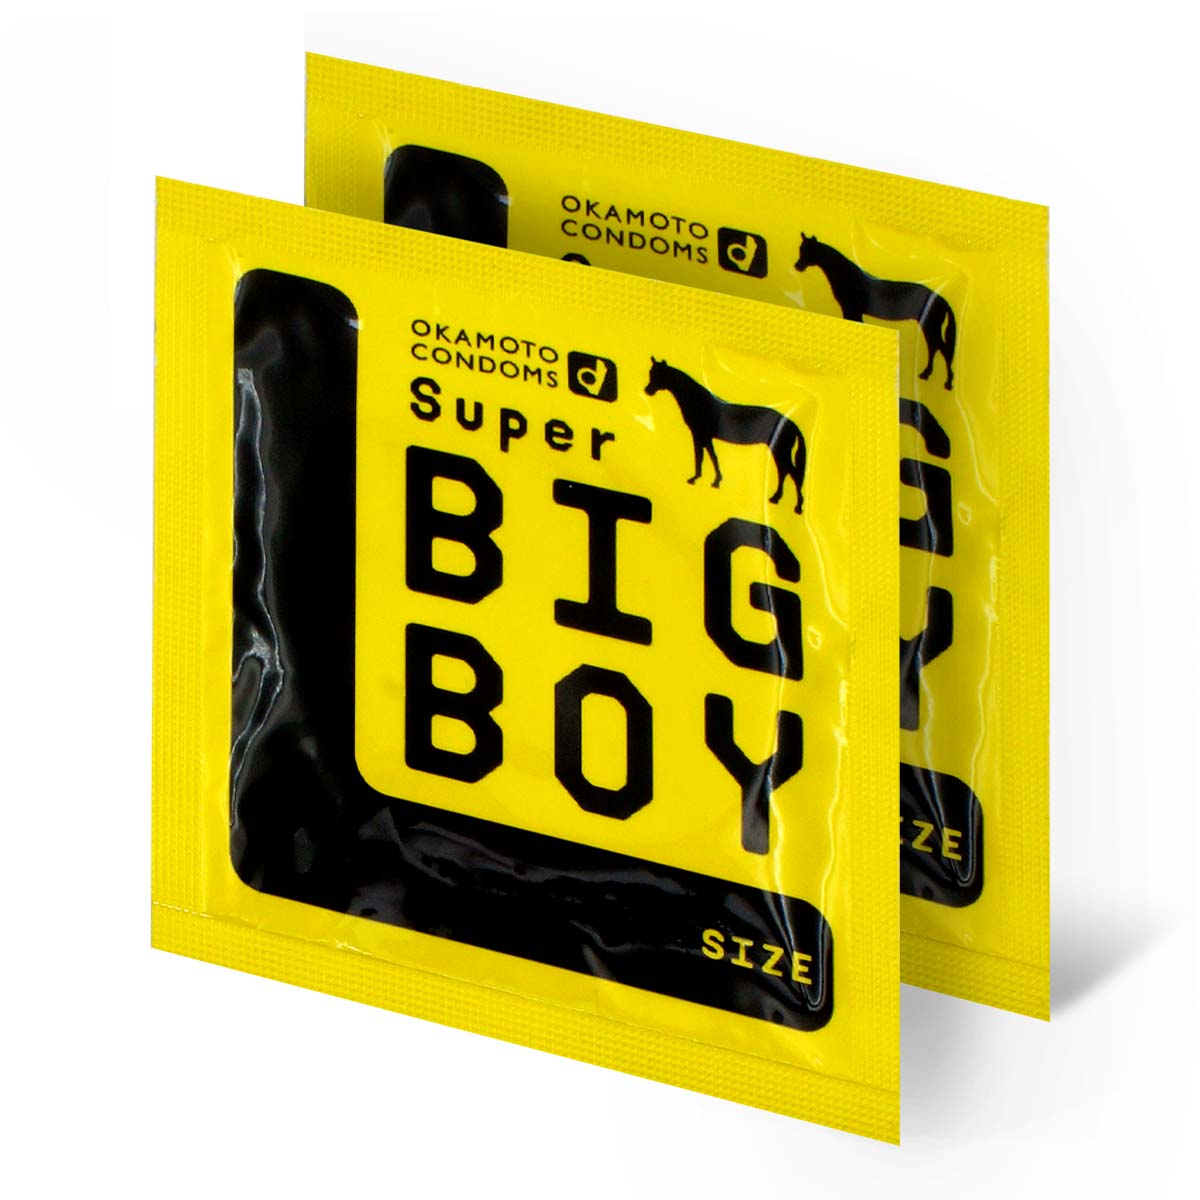 Super Big Boy 58mm (Japan Edition) 2 pieces Latex Condom-p_1